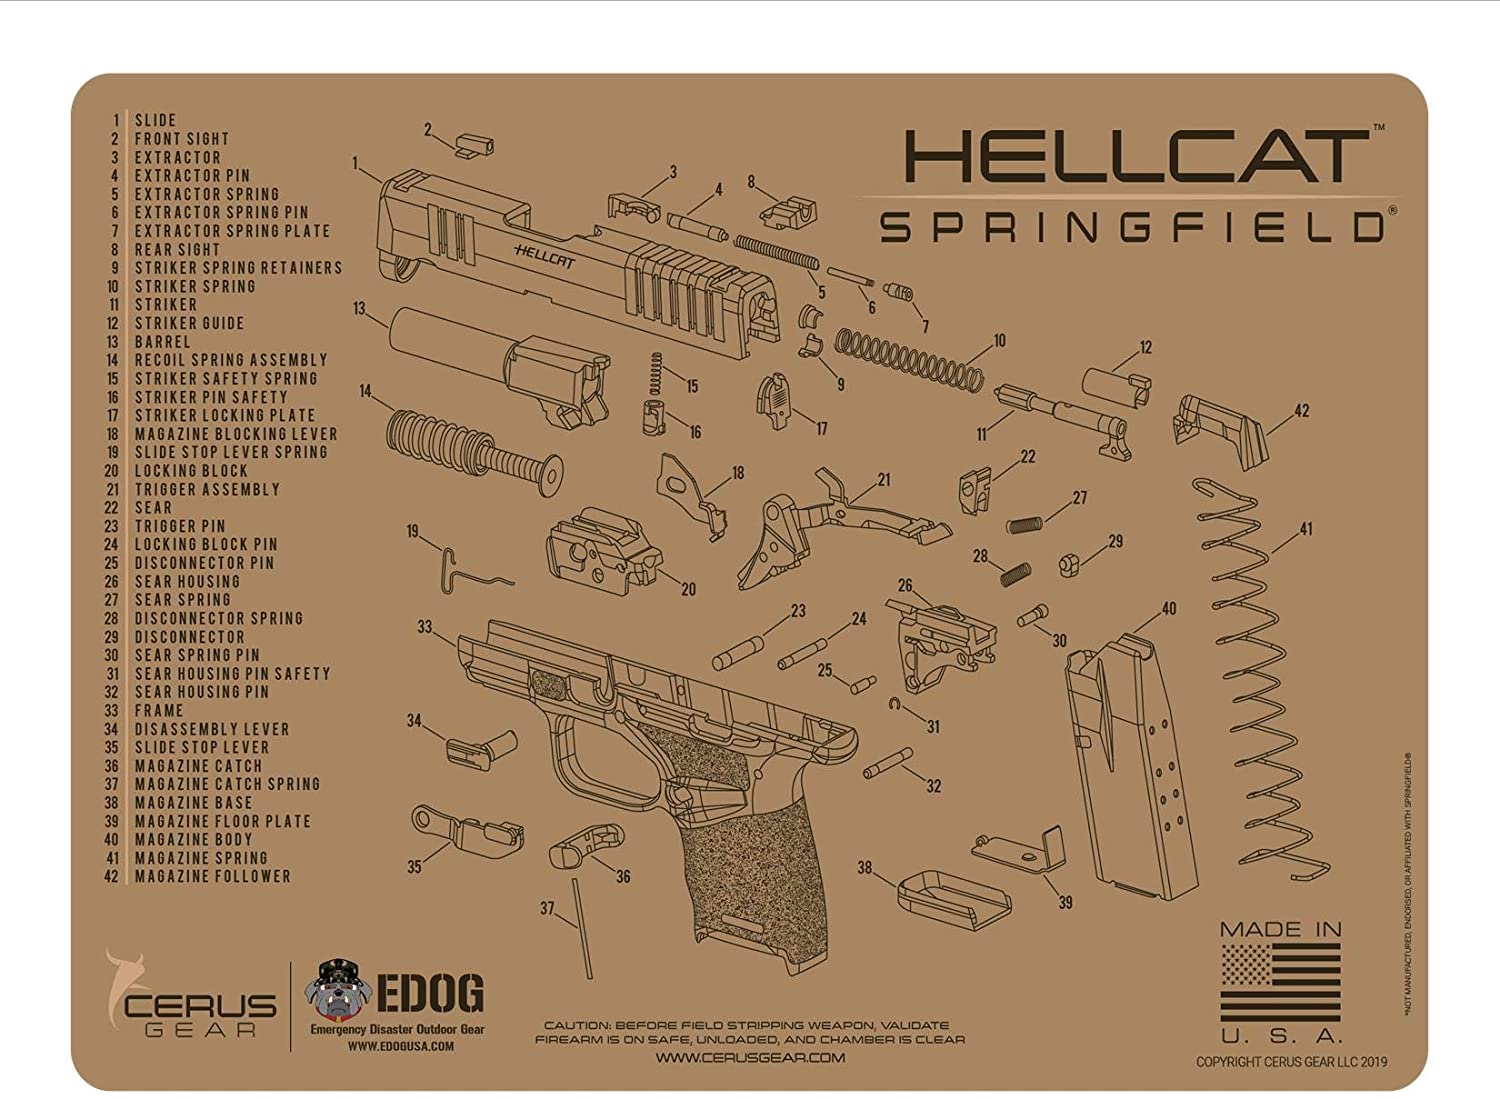 EDOG Springfield Armory Hellcat Cerus Exploded View Schematic Gun